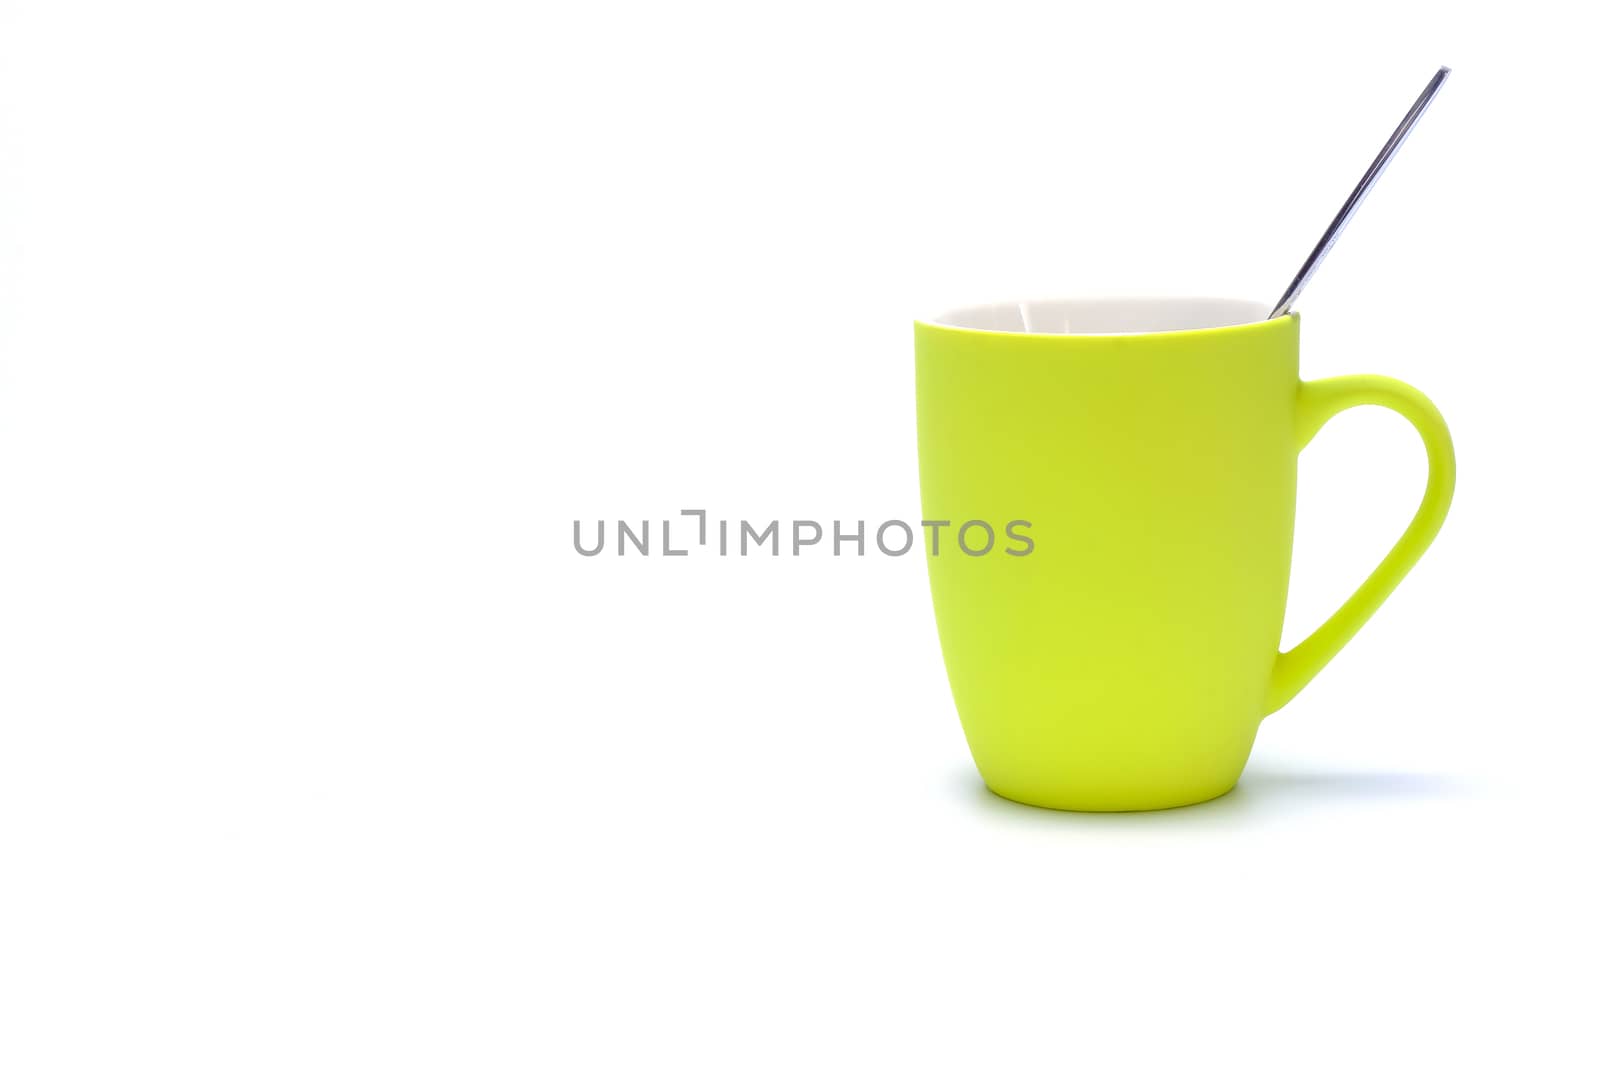 colorful coffee mug isolated on white background